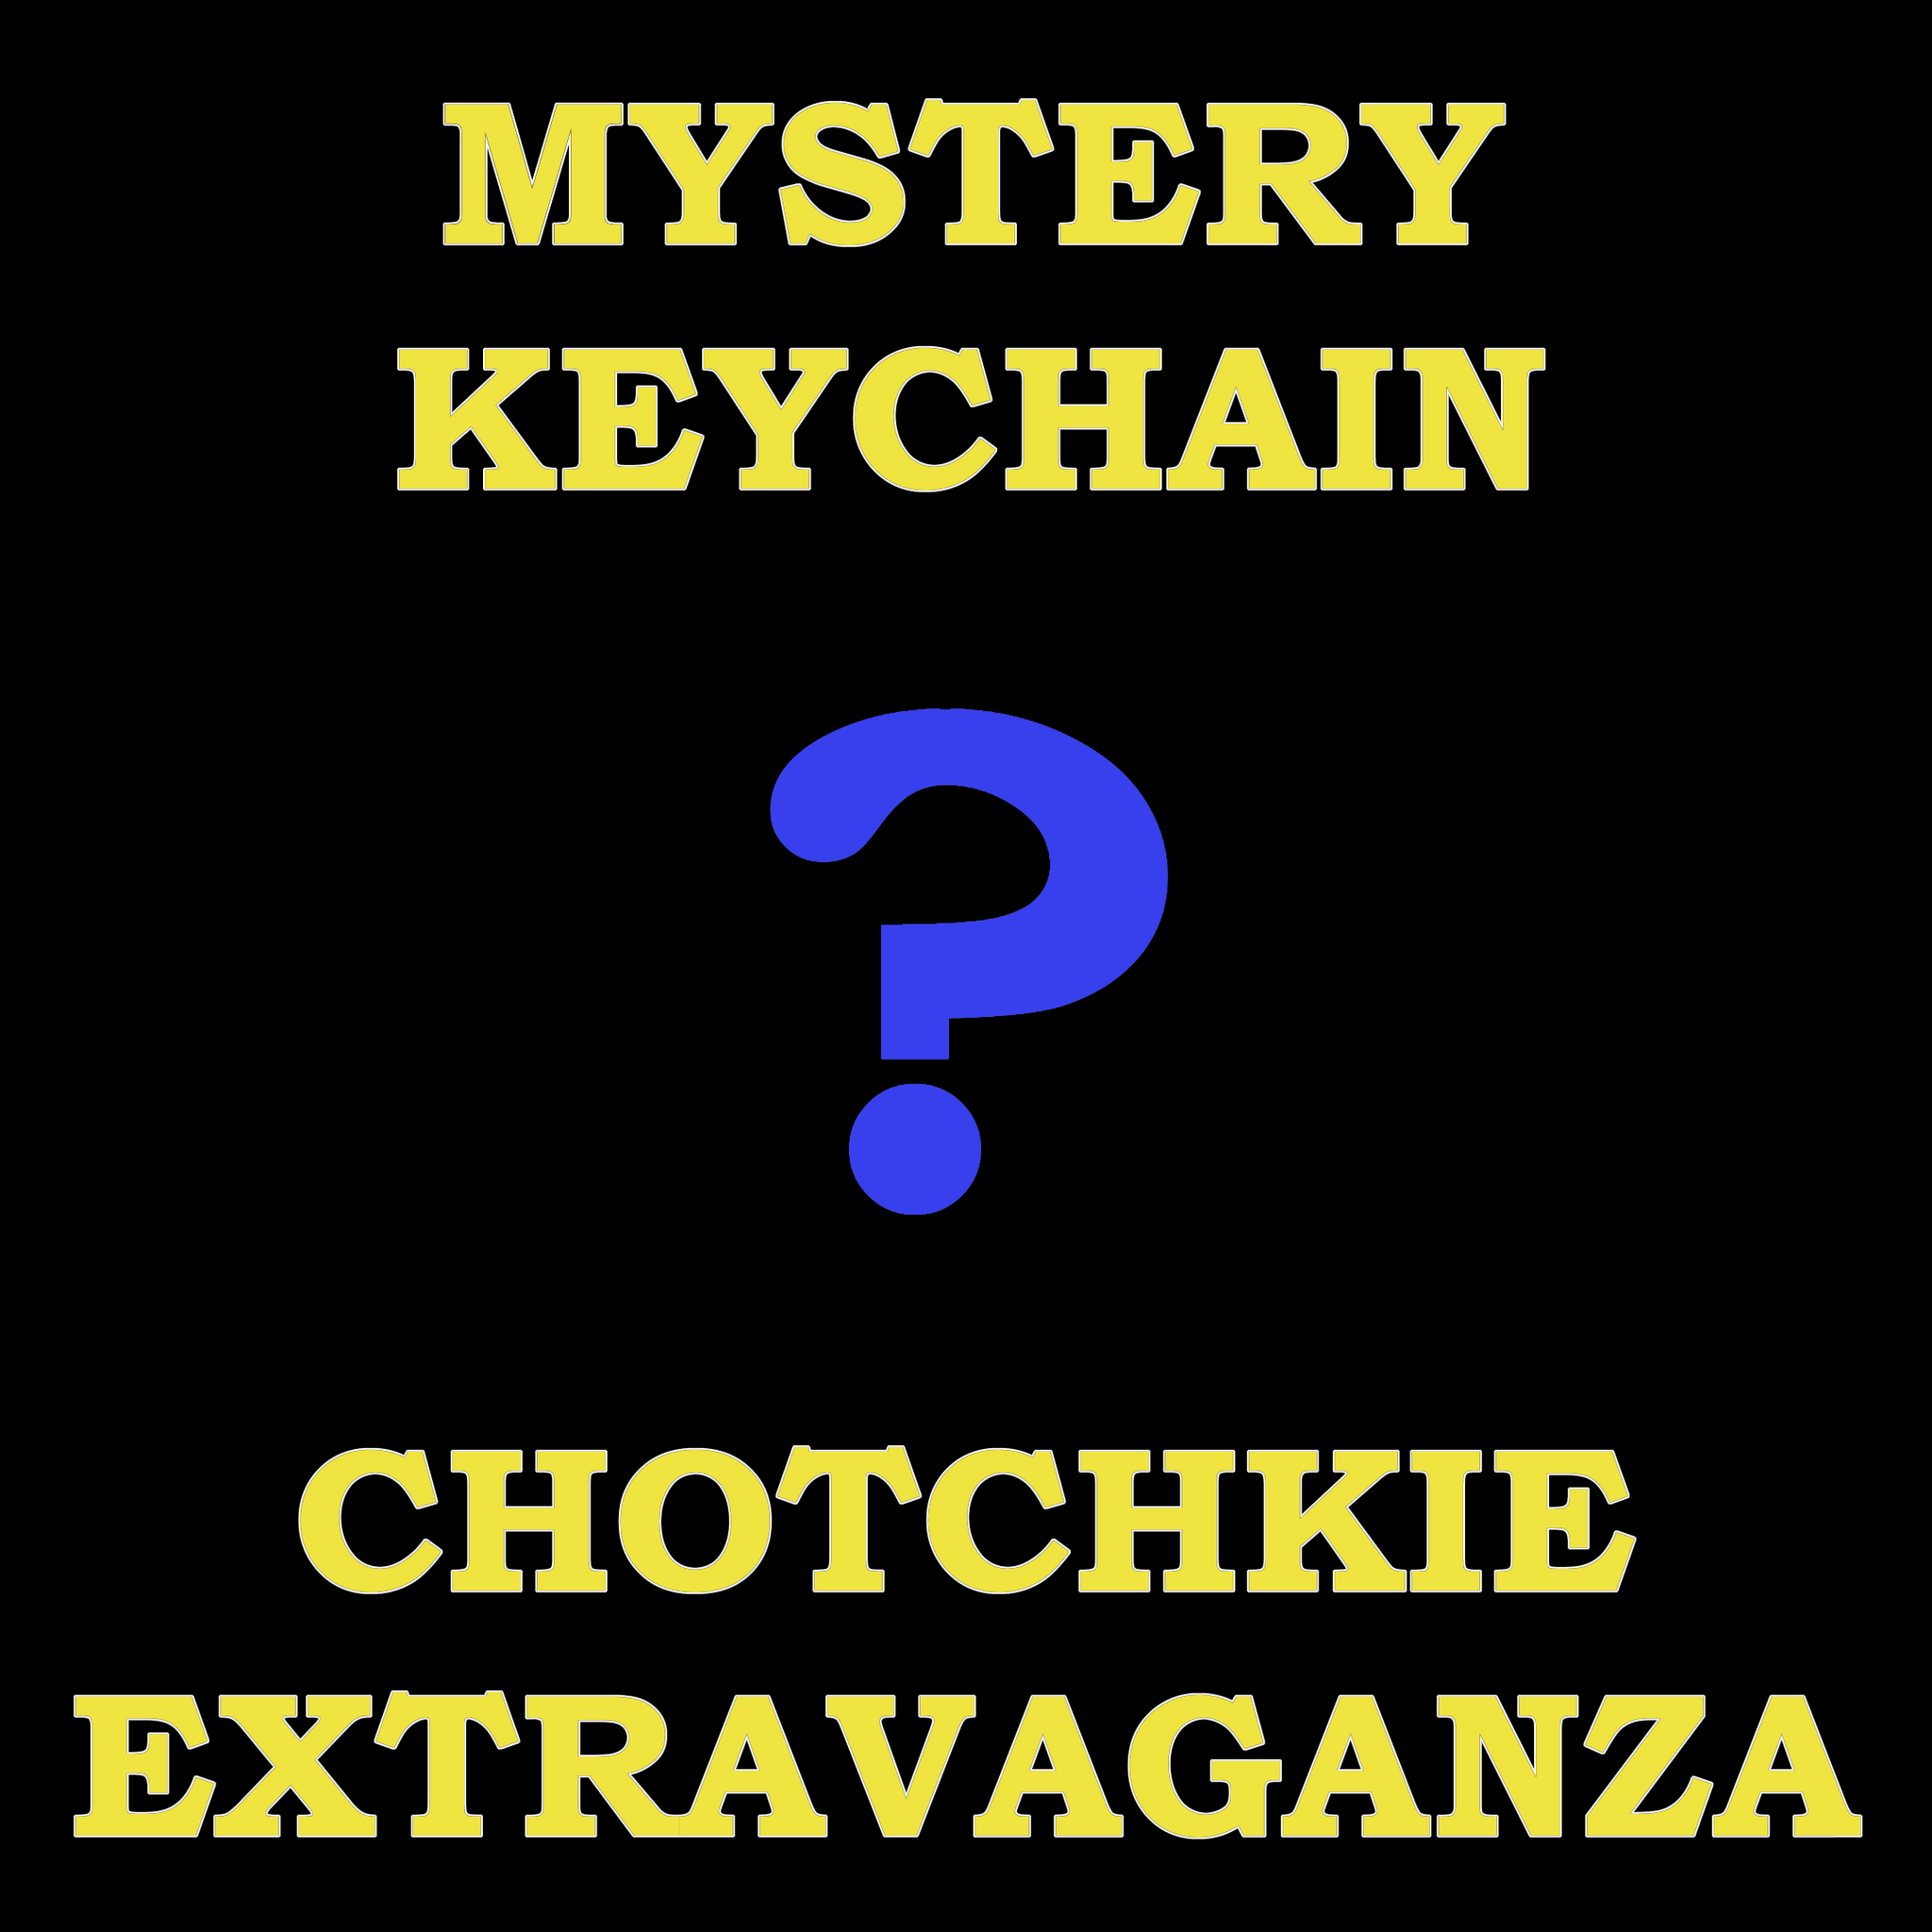 GPK-DD-004 Mystery Keychain Chotchkie Extravaganza (25 available)